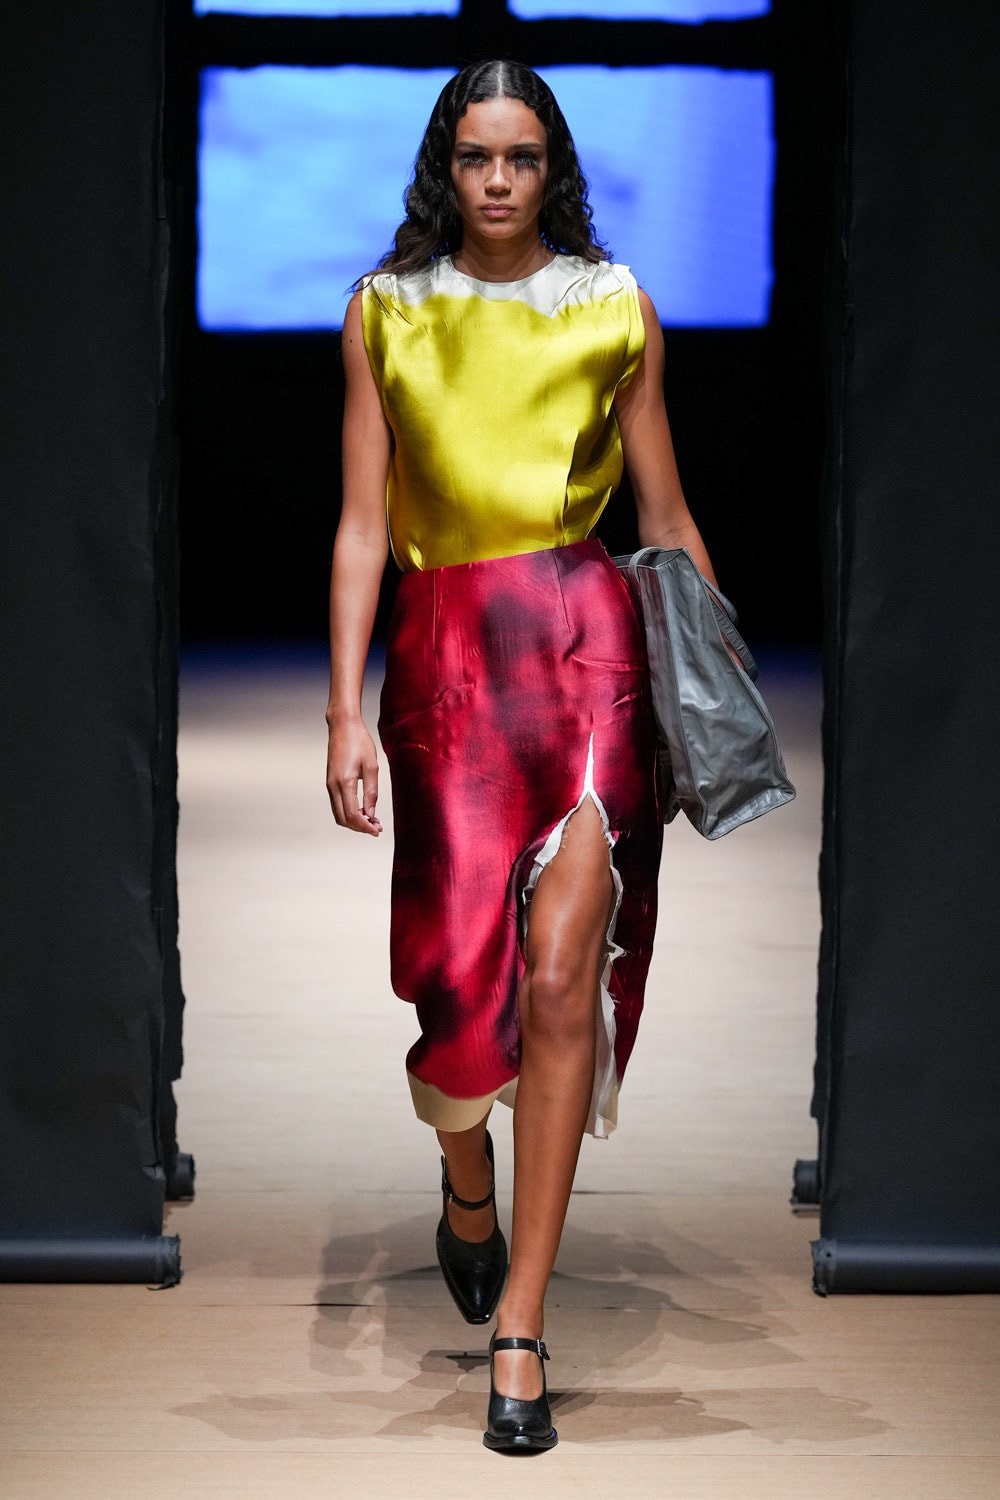 Prada Milan Fashion Week SS23 Spring Summer 2023 Show Runway Raf Simons Miuccia Prada Womenswear Collection First Look Images